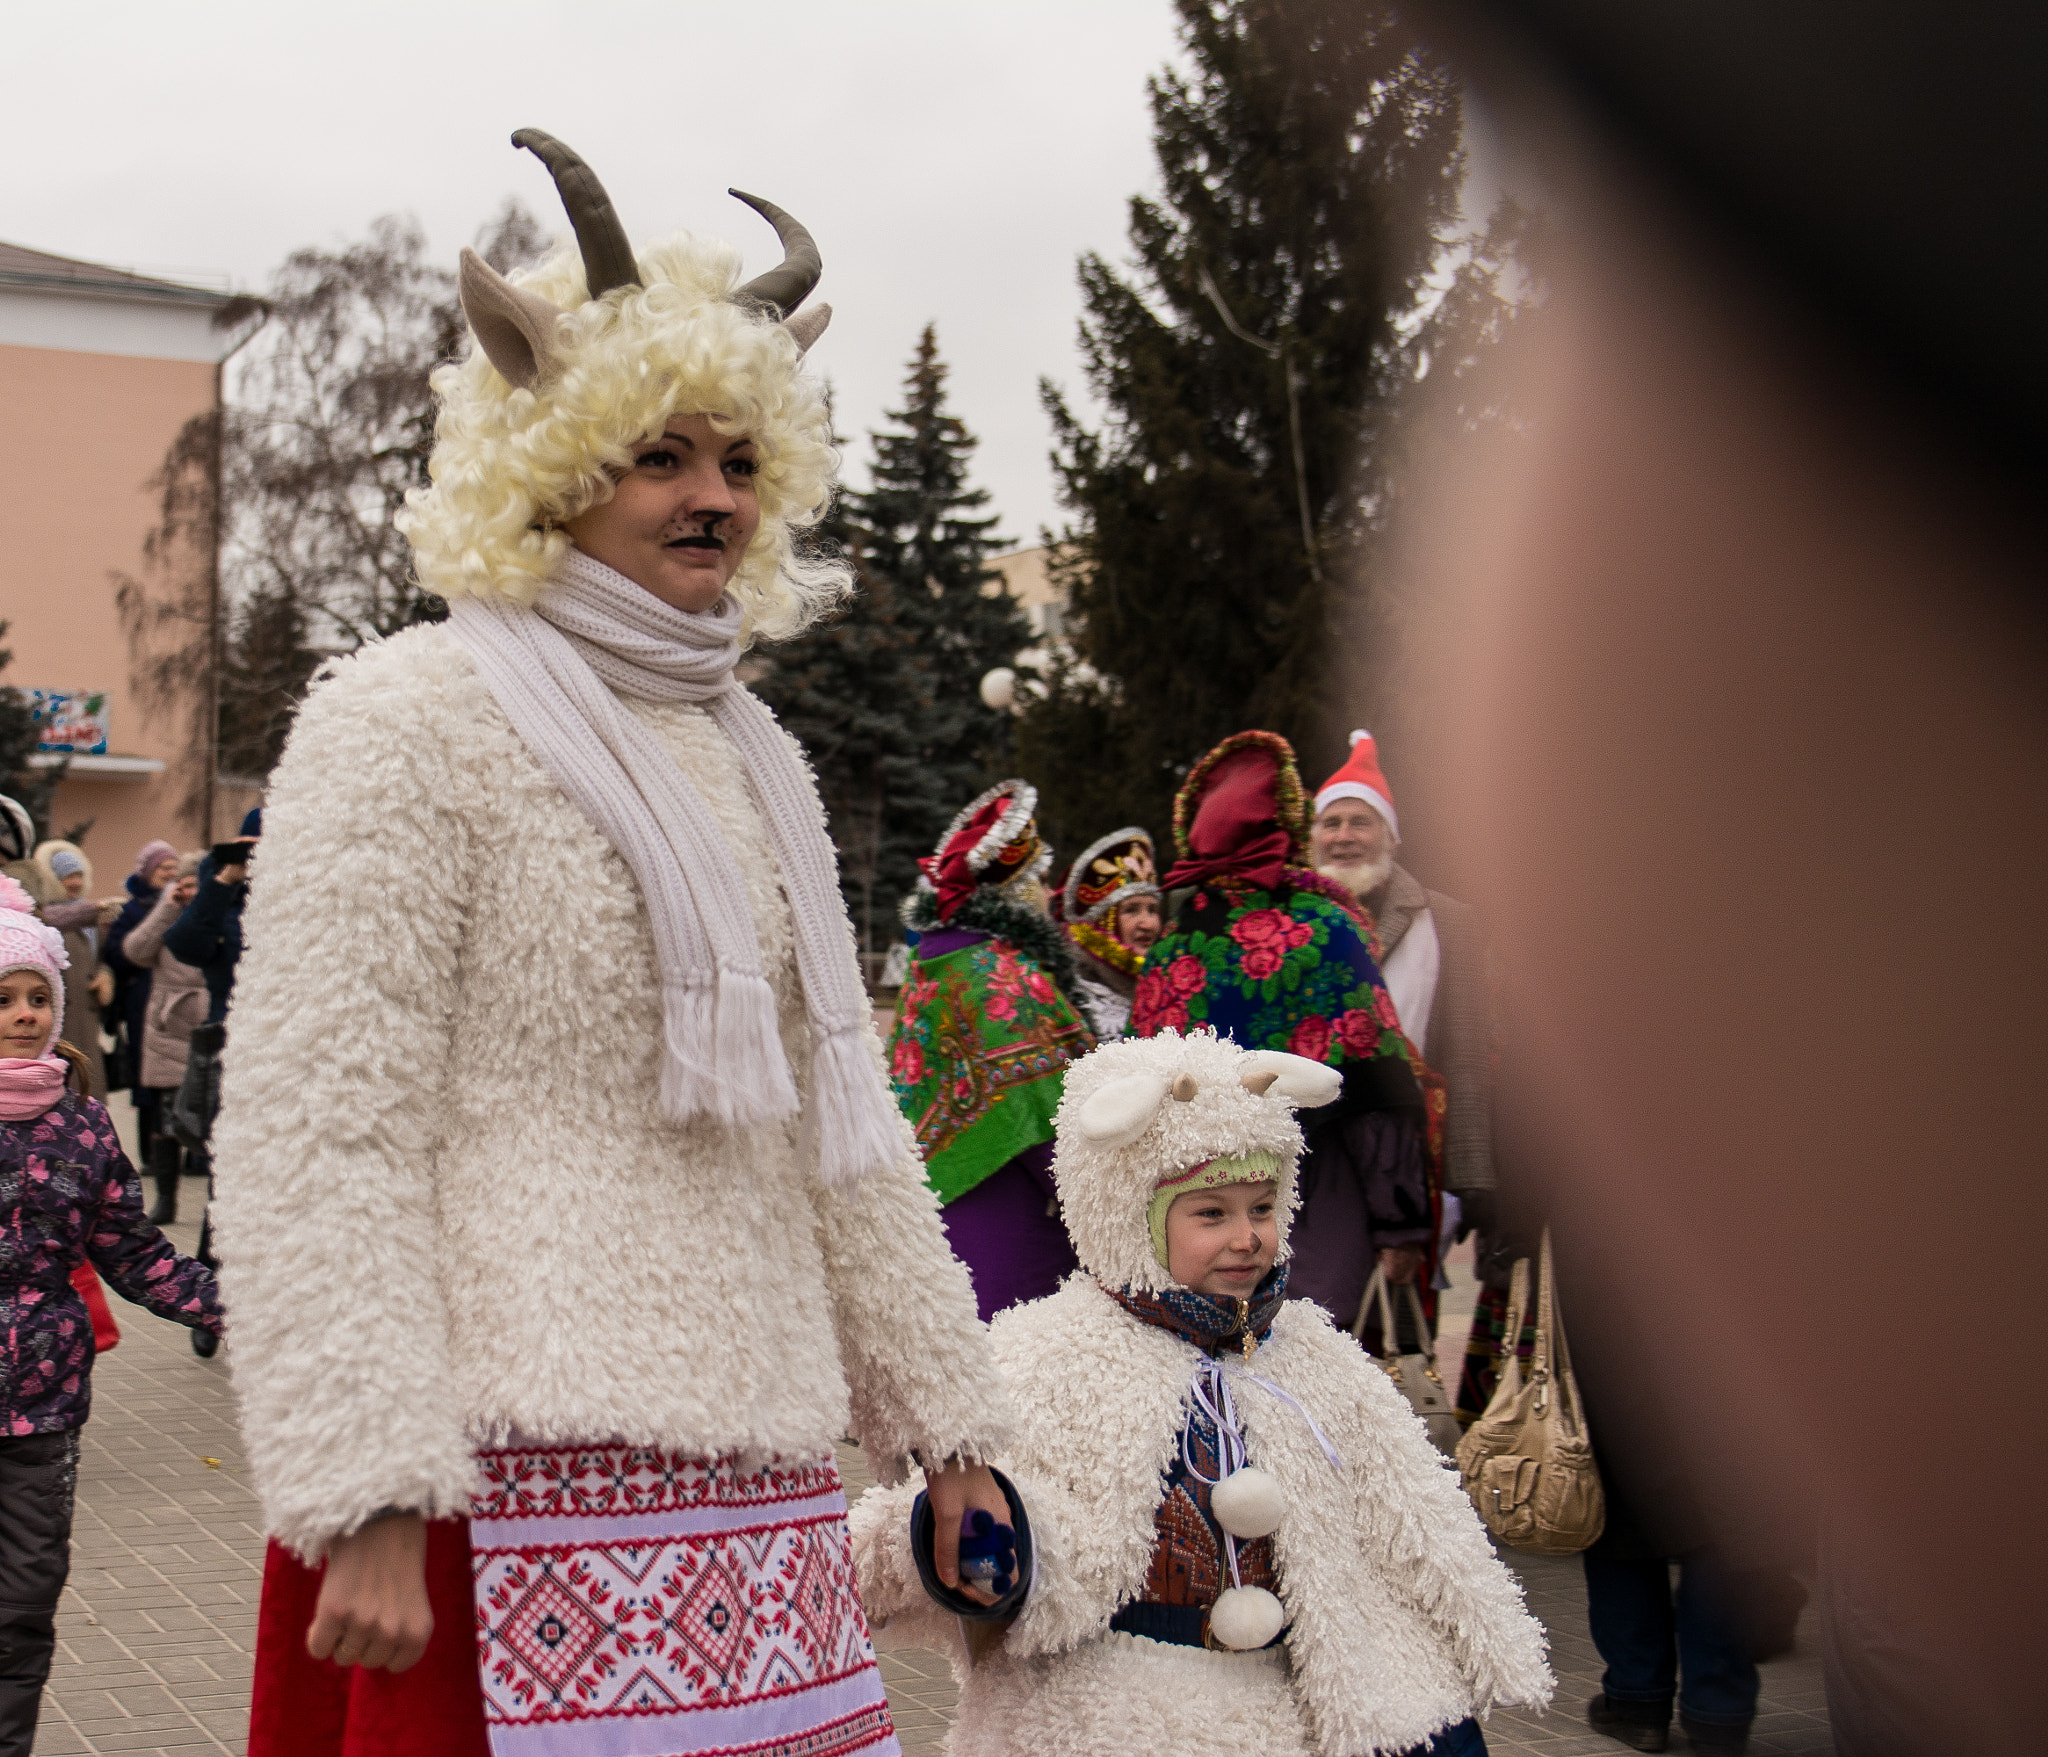 The parade of Santa Clauses in Belgorod